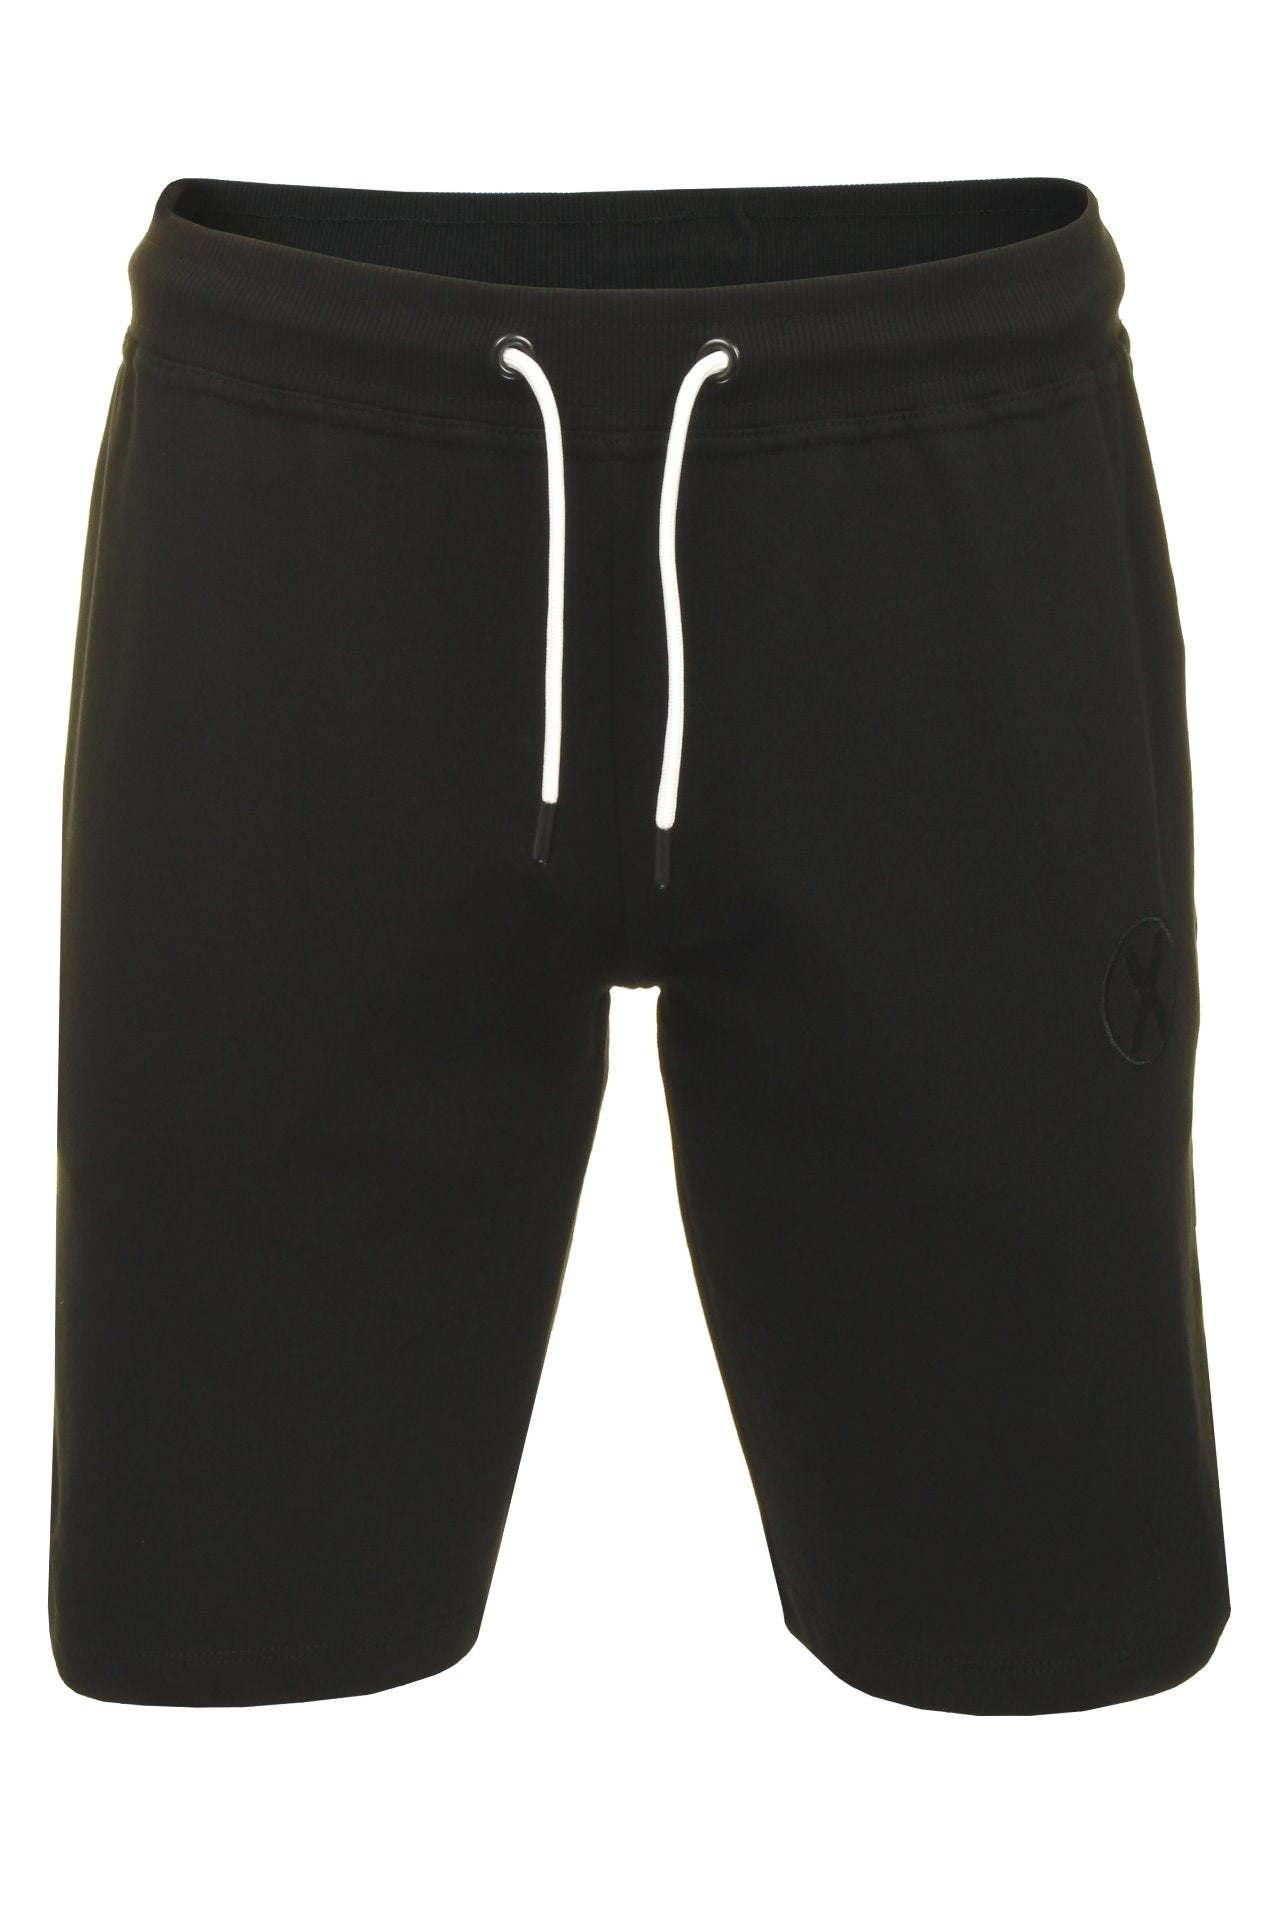 Xact Men's Cotton Gym/ Sweat Jogger Shorts-Main Image